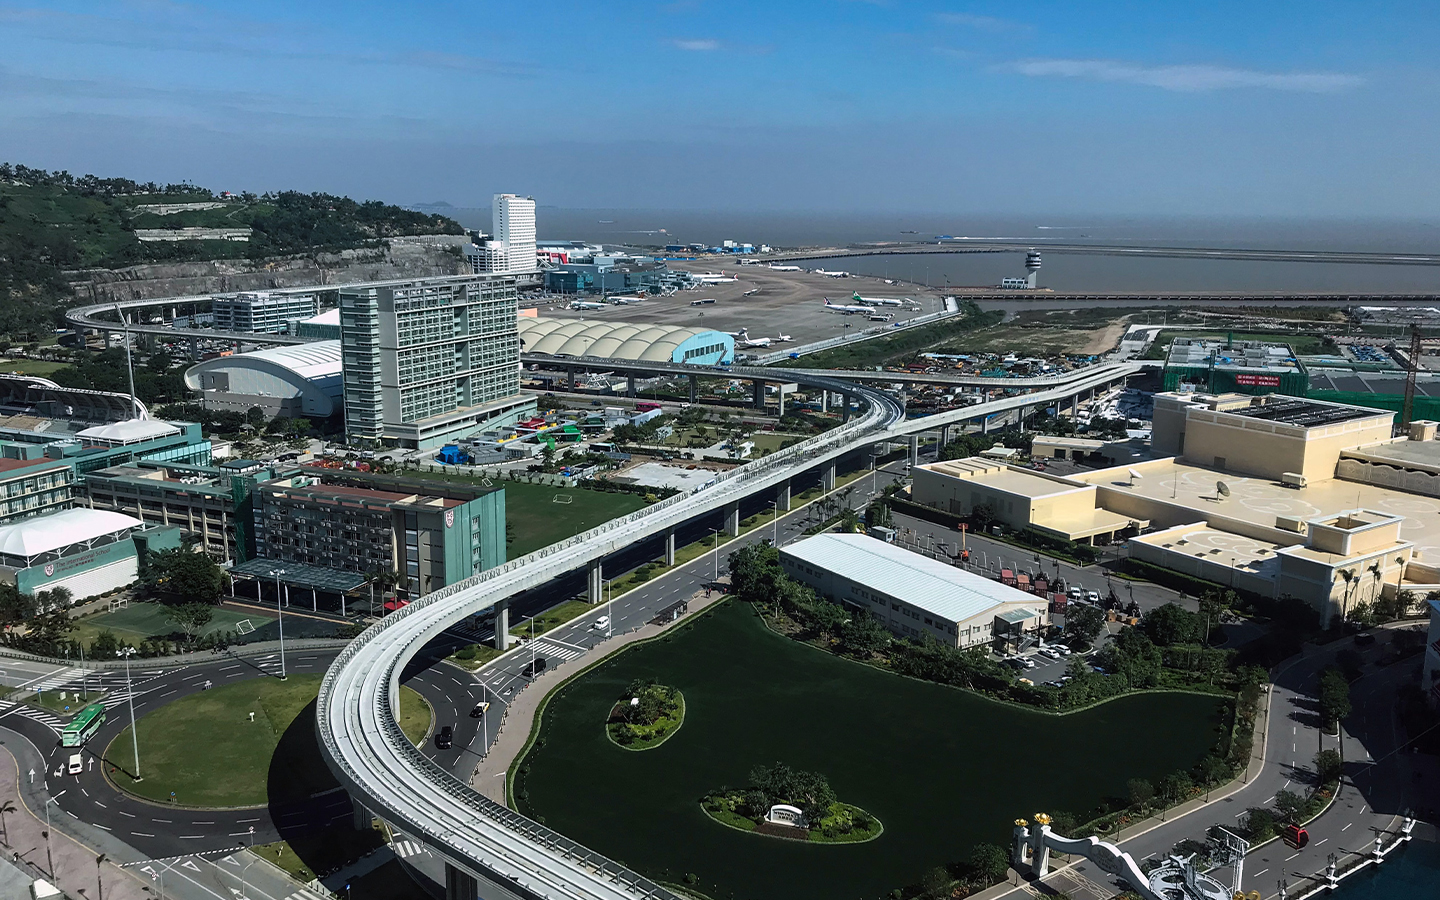 Macau airport’s passenger volume is still well below pre-pandemic levels